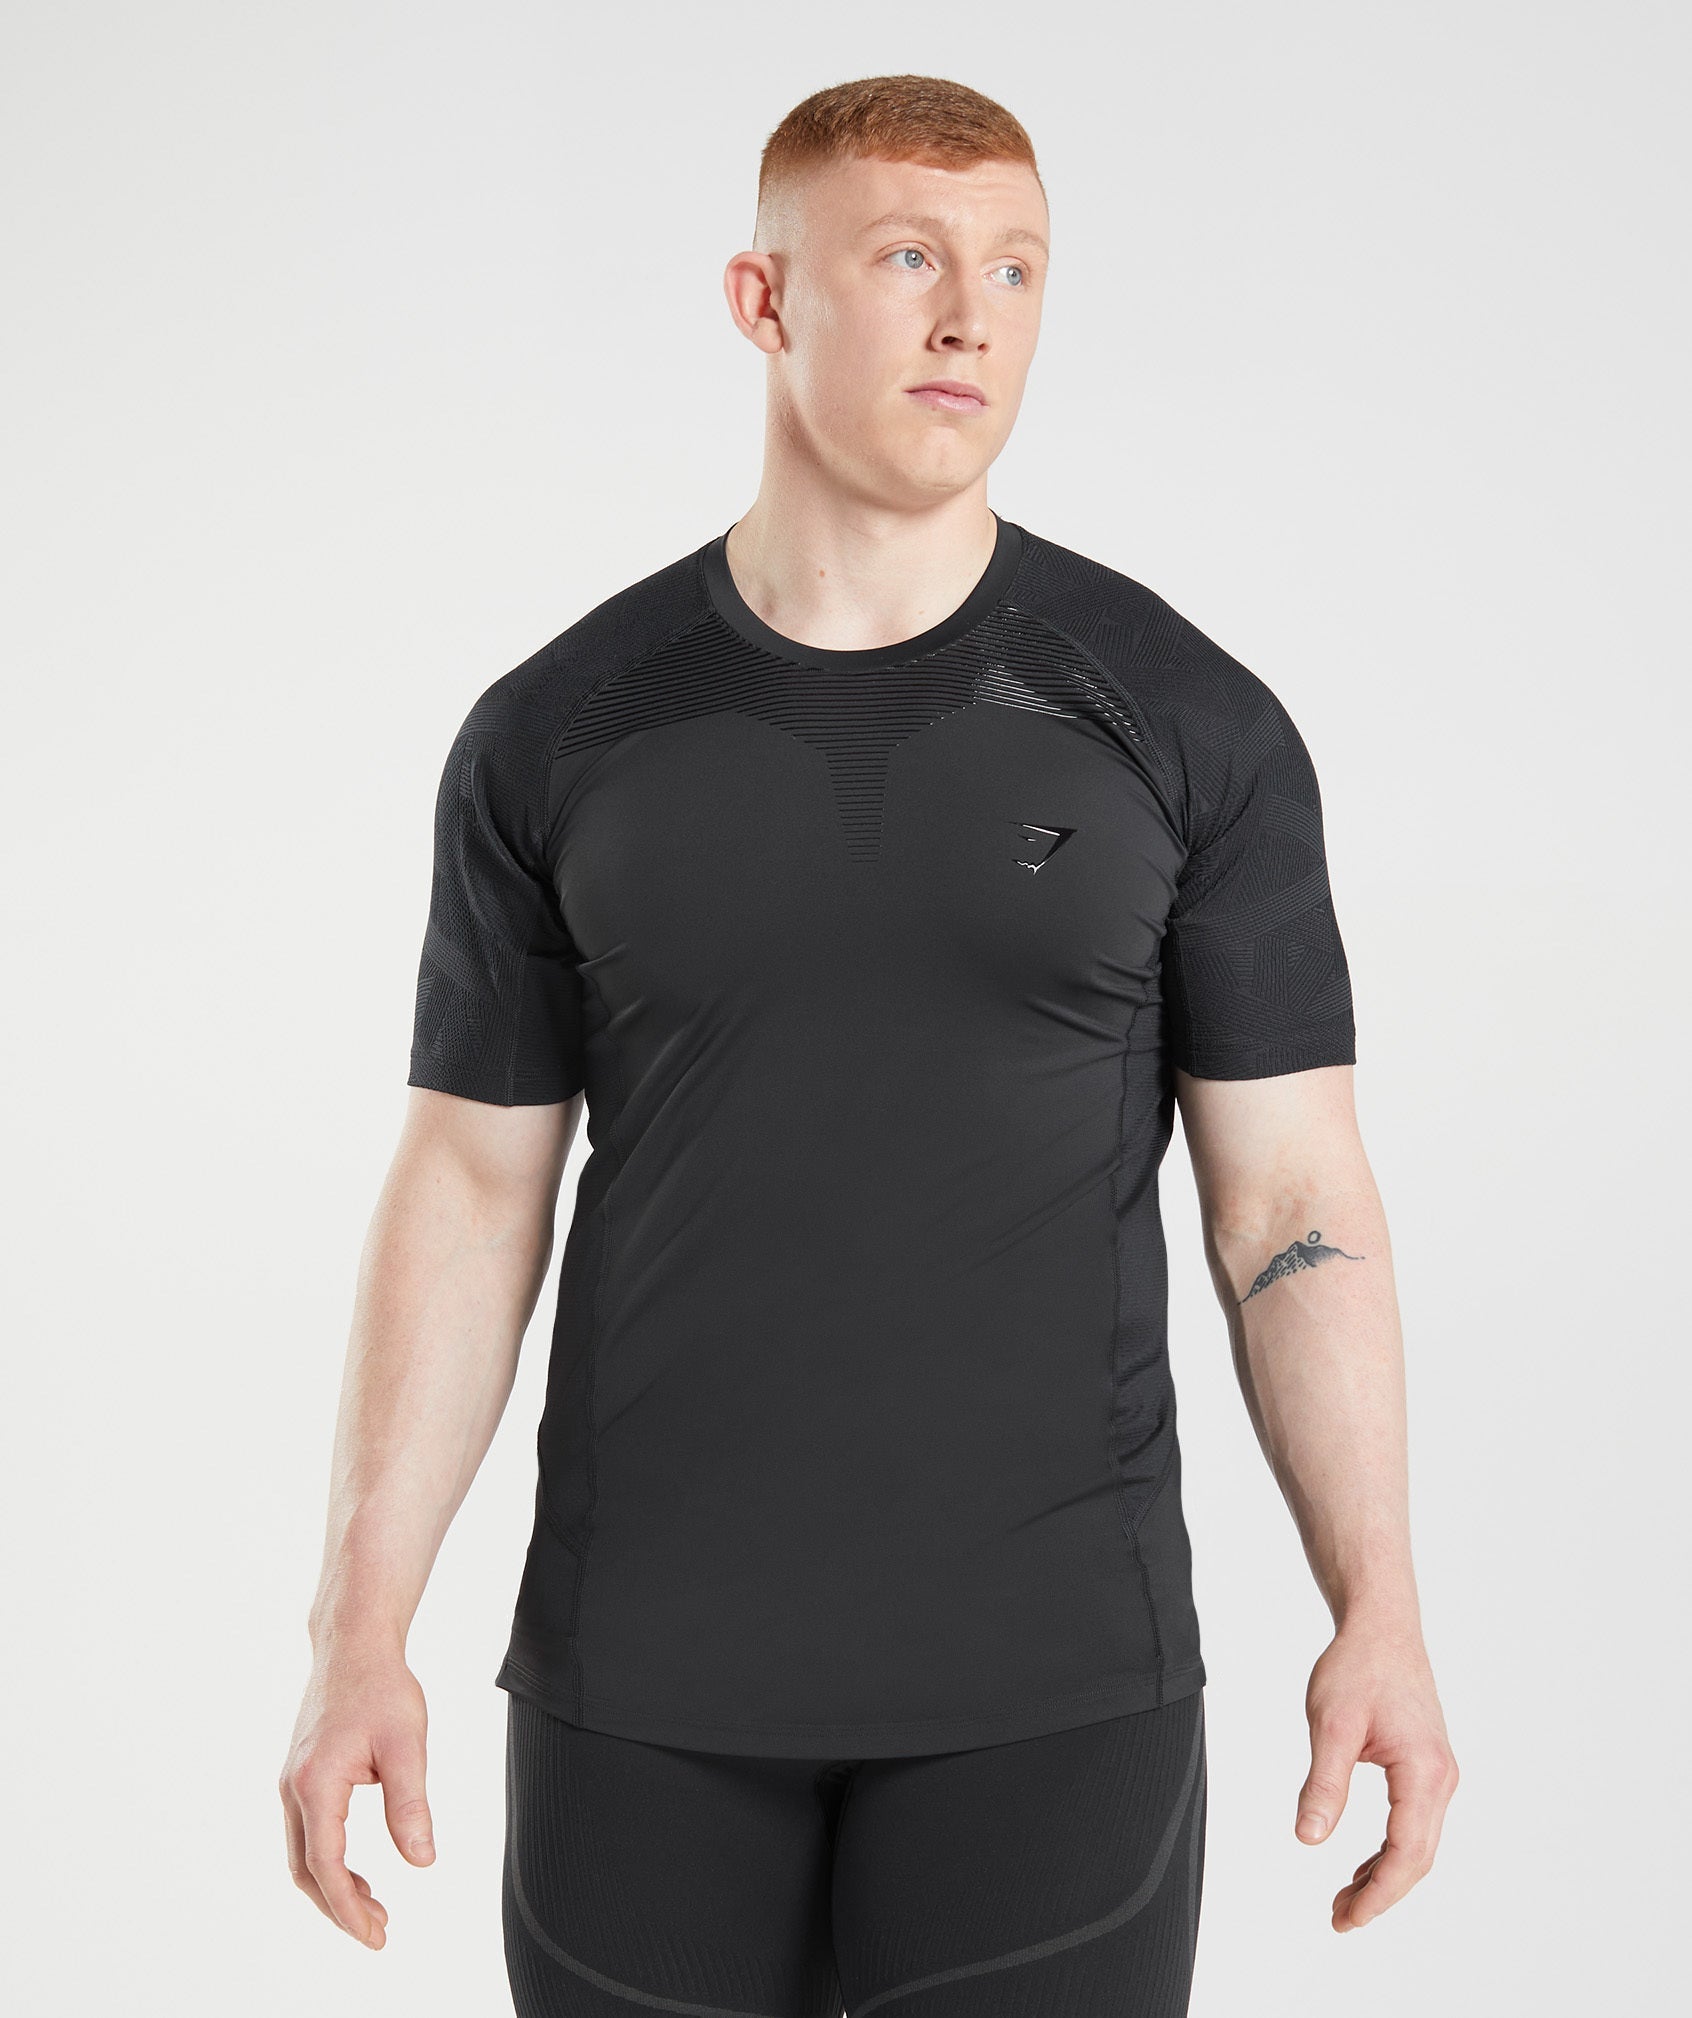 Gymshark 315 T-Shirt - Black